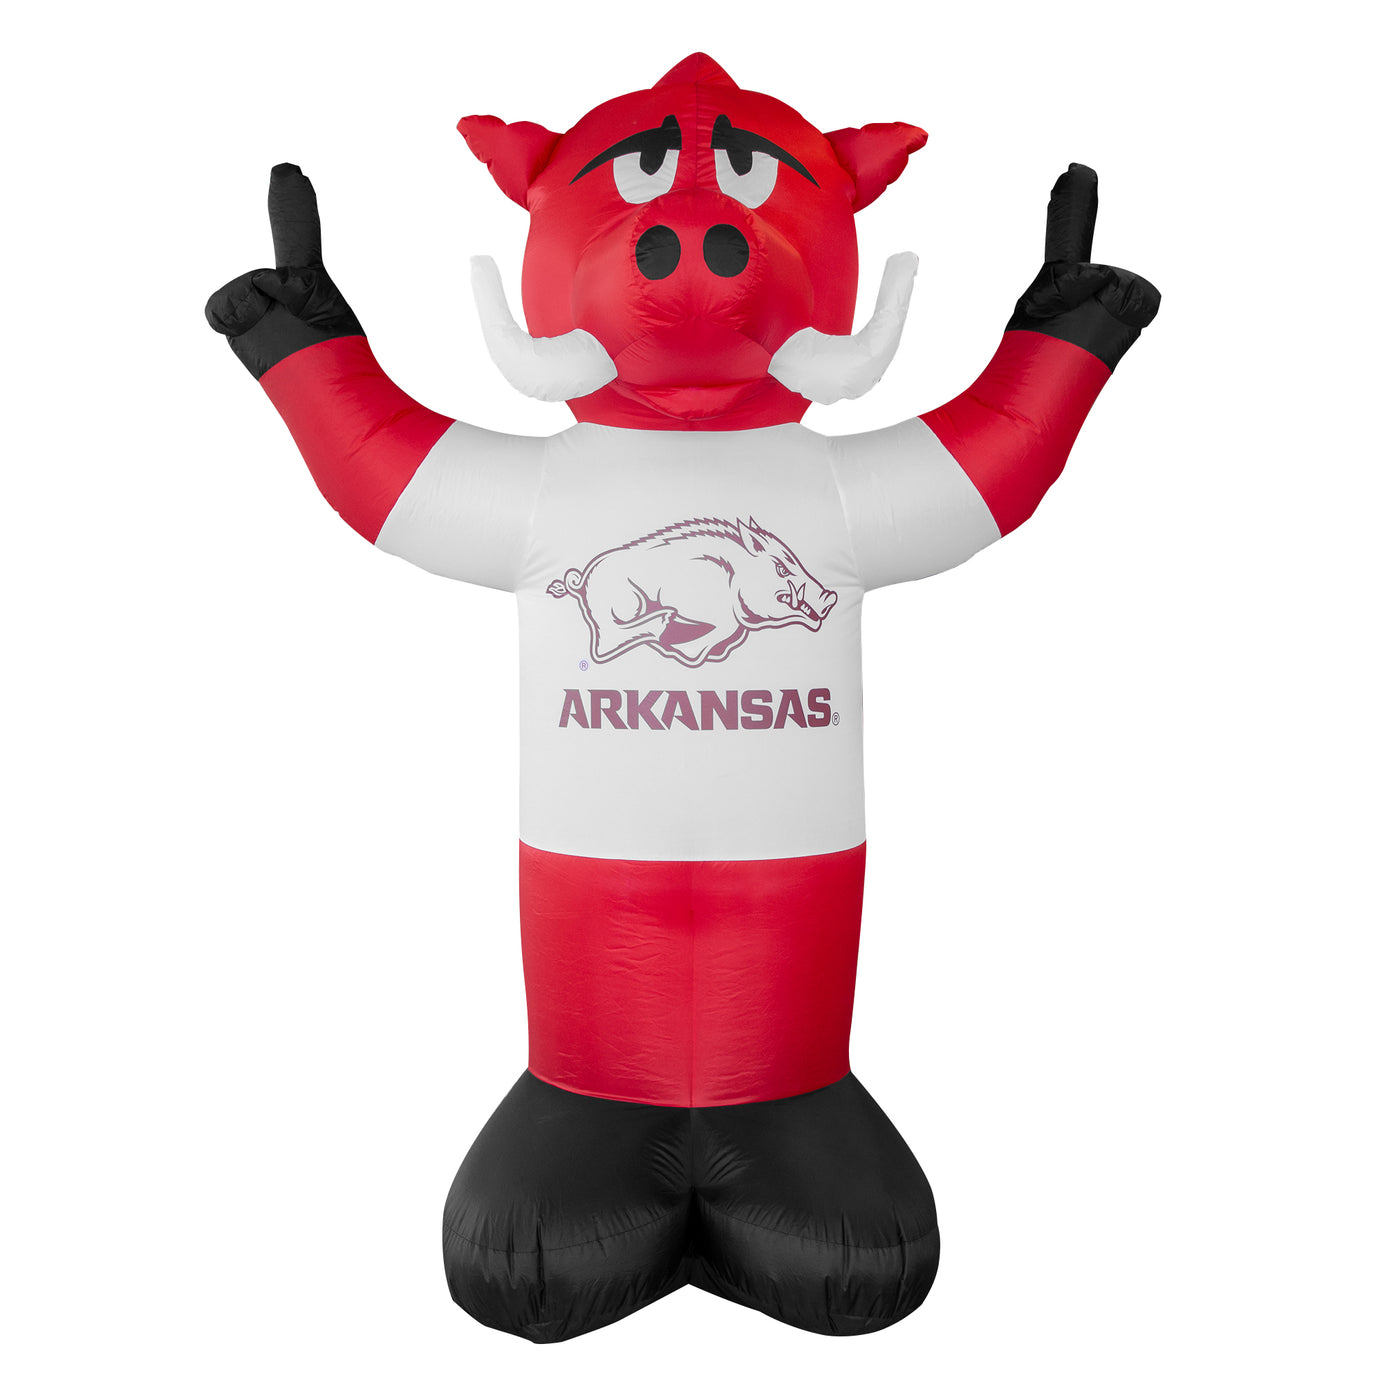 Arkansas Inflatable Mascot